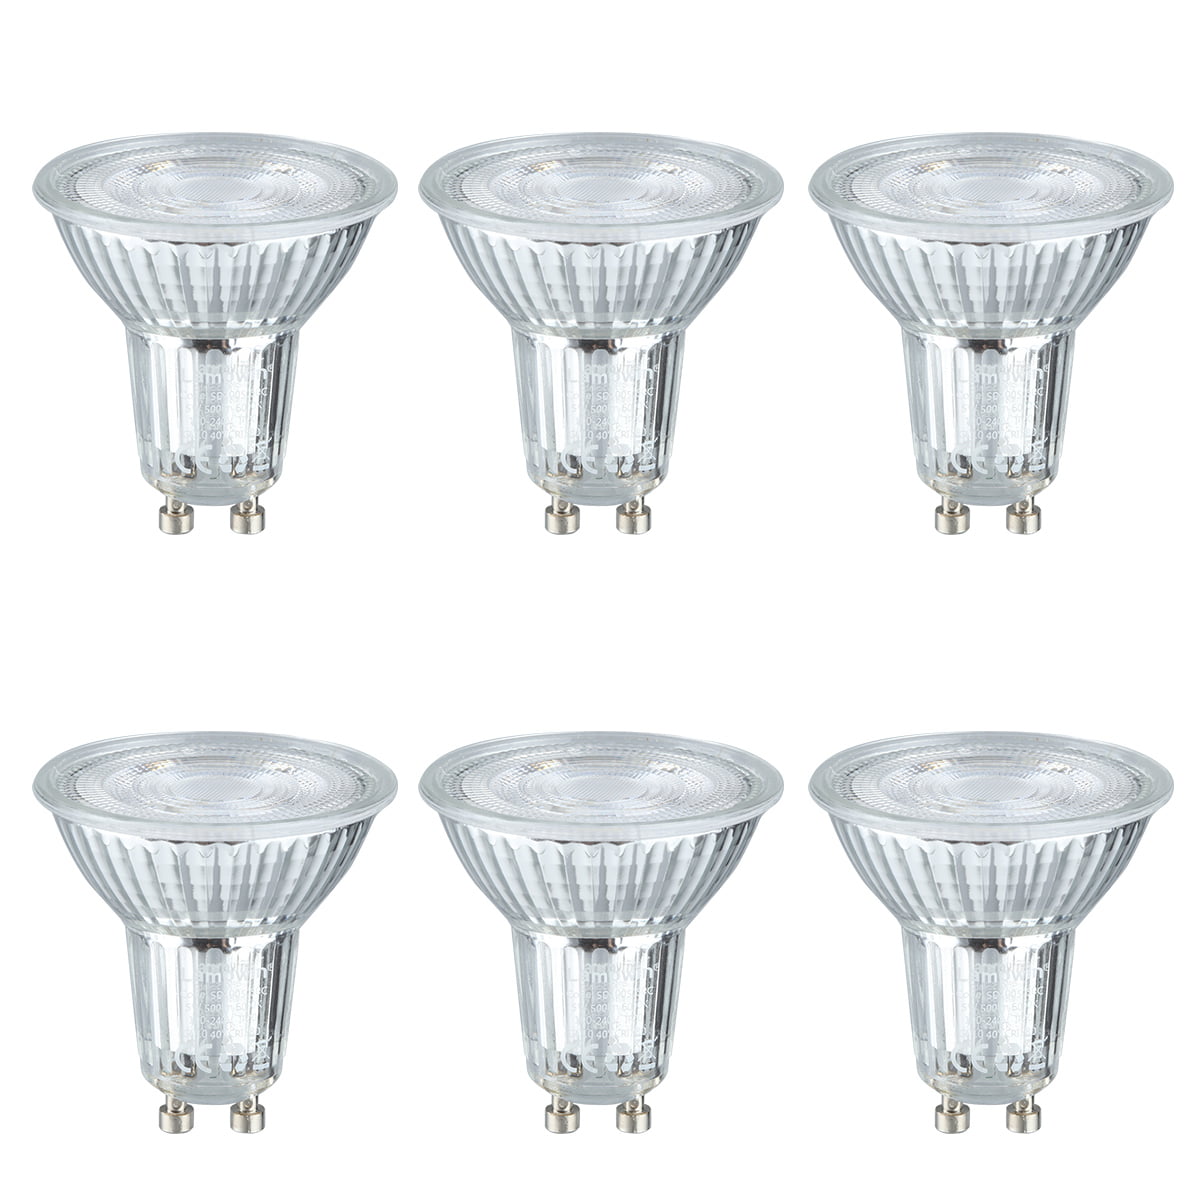 6PCS Lampwin LED Bulbs Spotlight 5W GU10 SMD Lamp 100-240V 6000K Cool White USA 